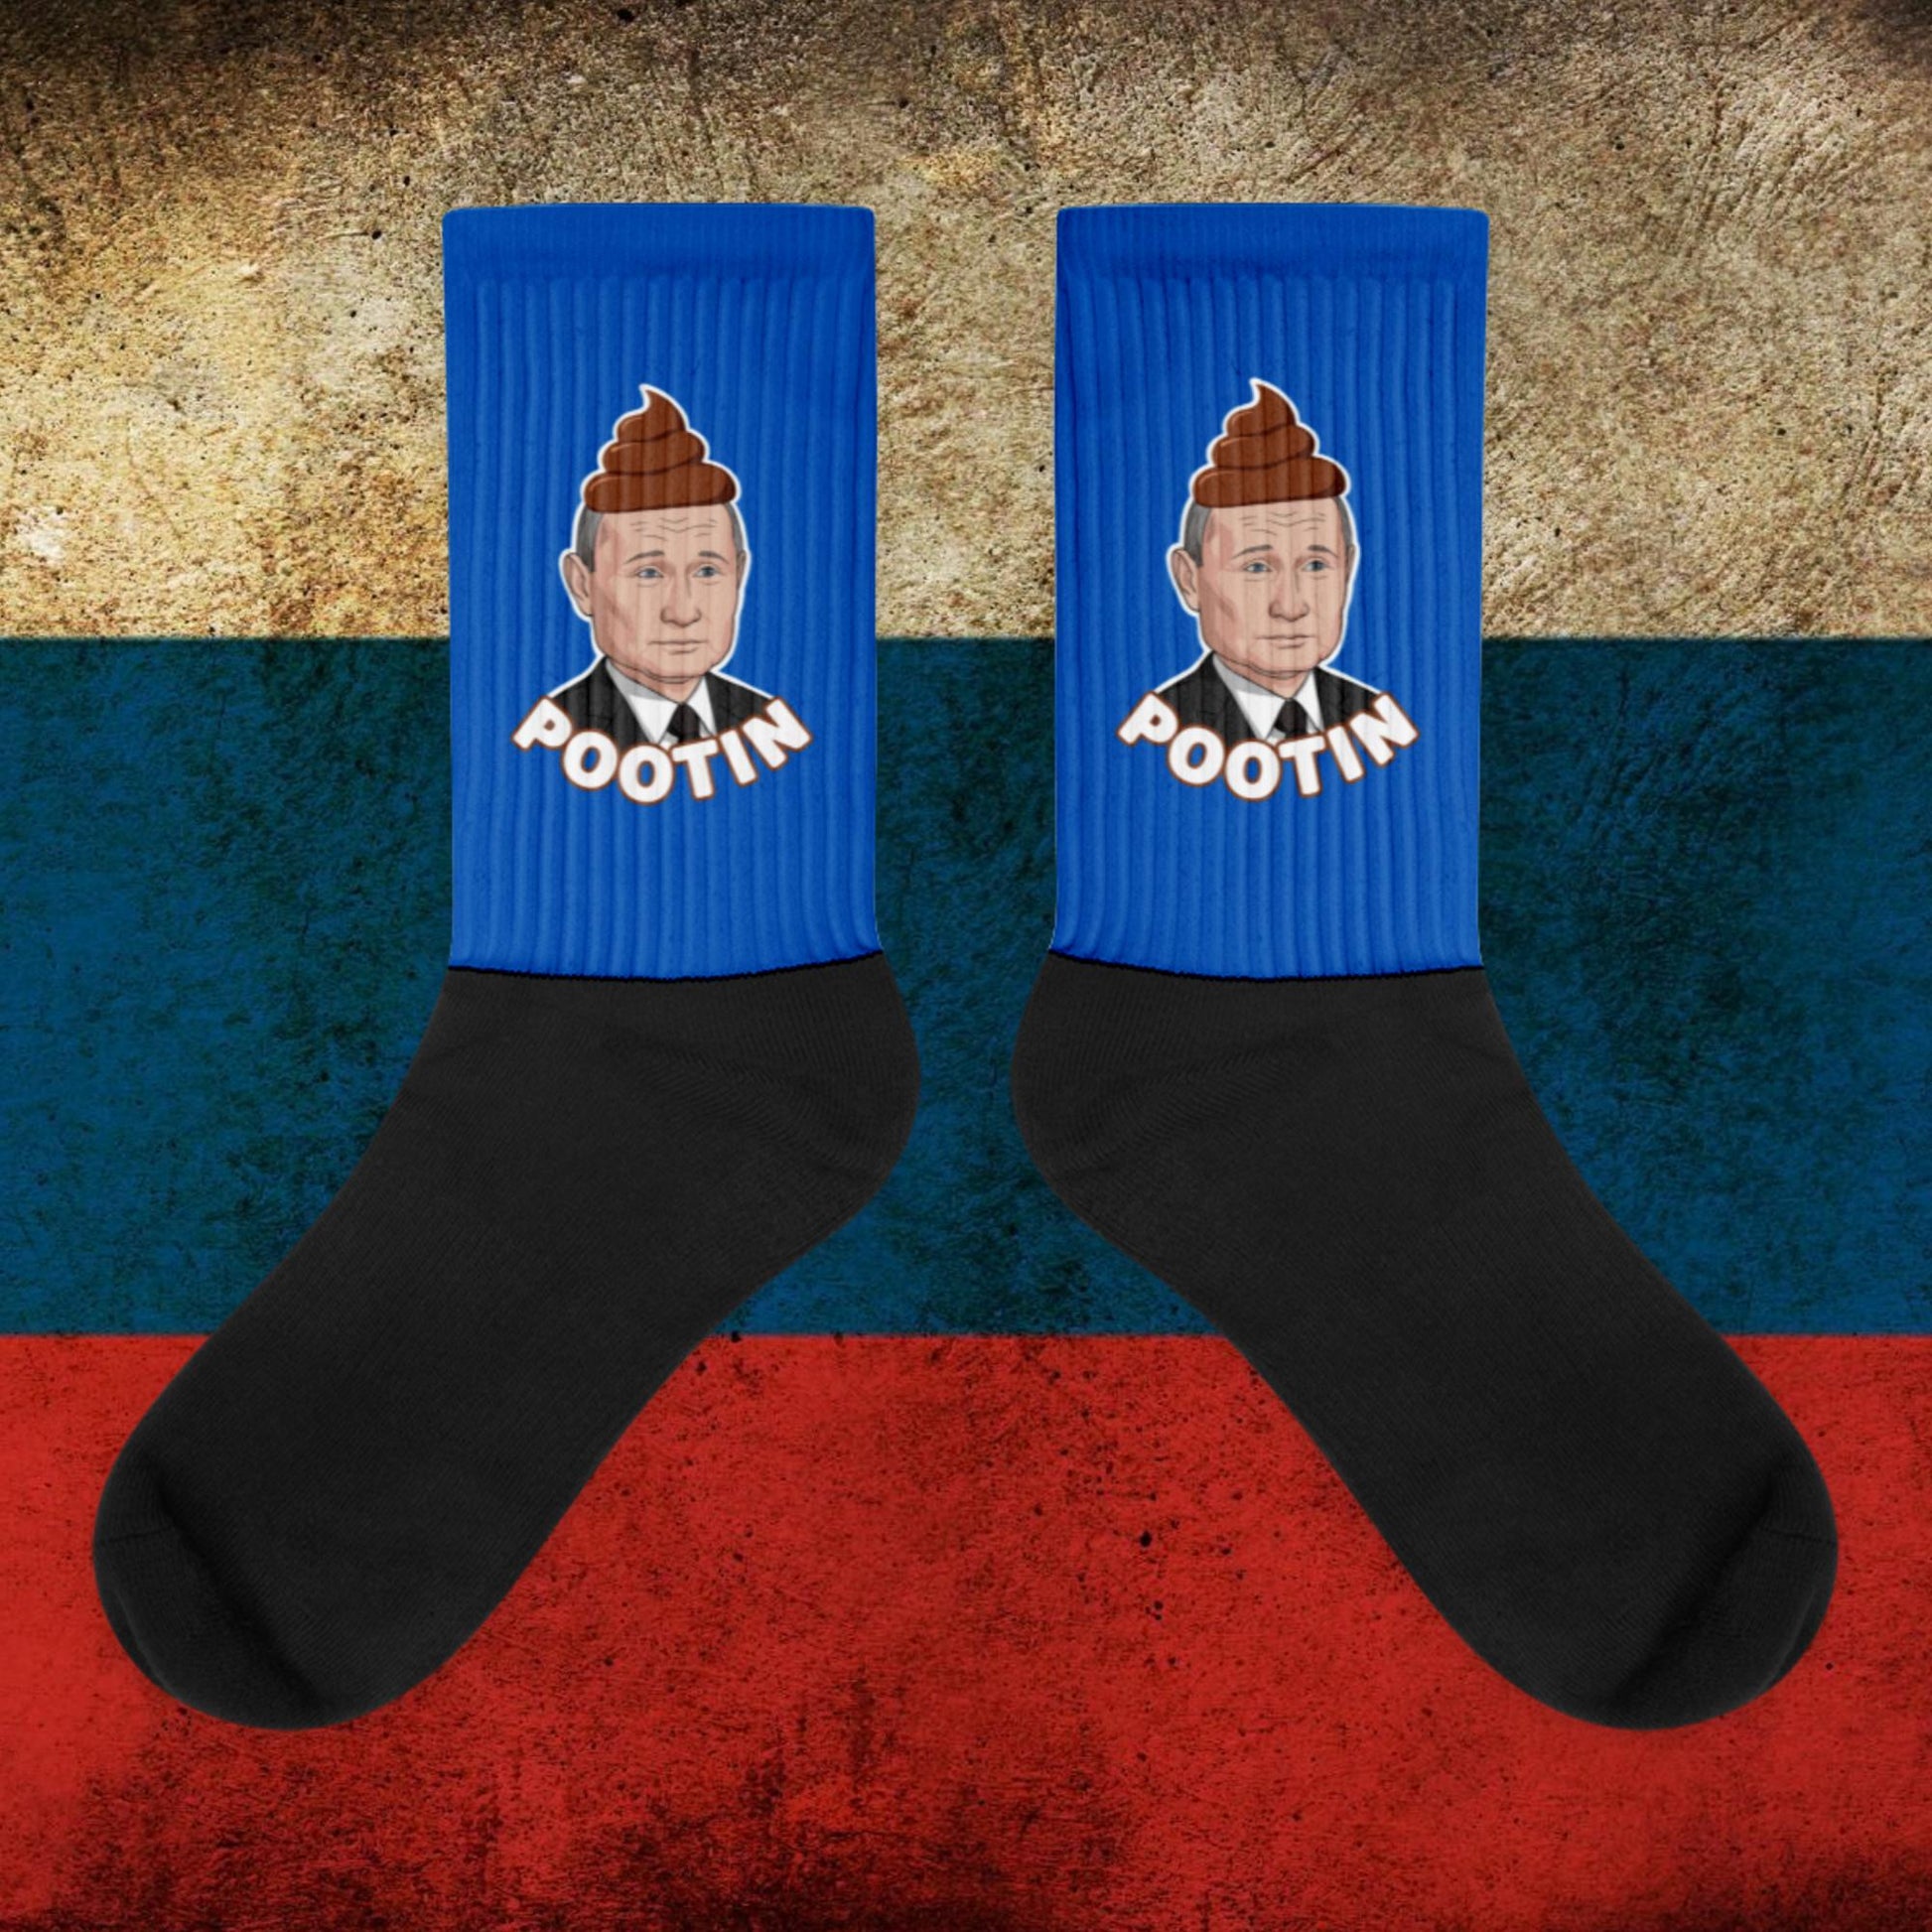 Pootin Funny Anti Vladimir Putin Socks Next Cult Brand